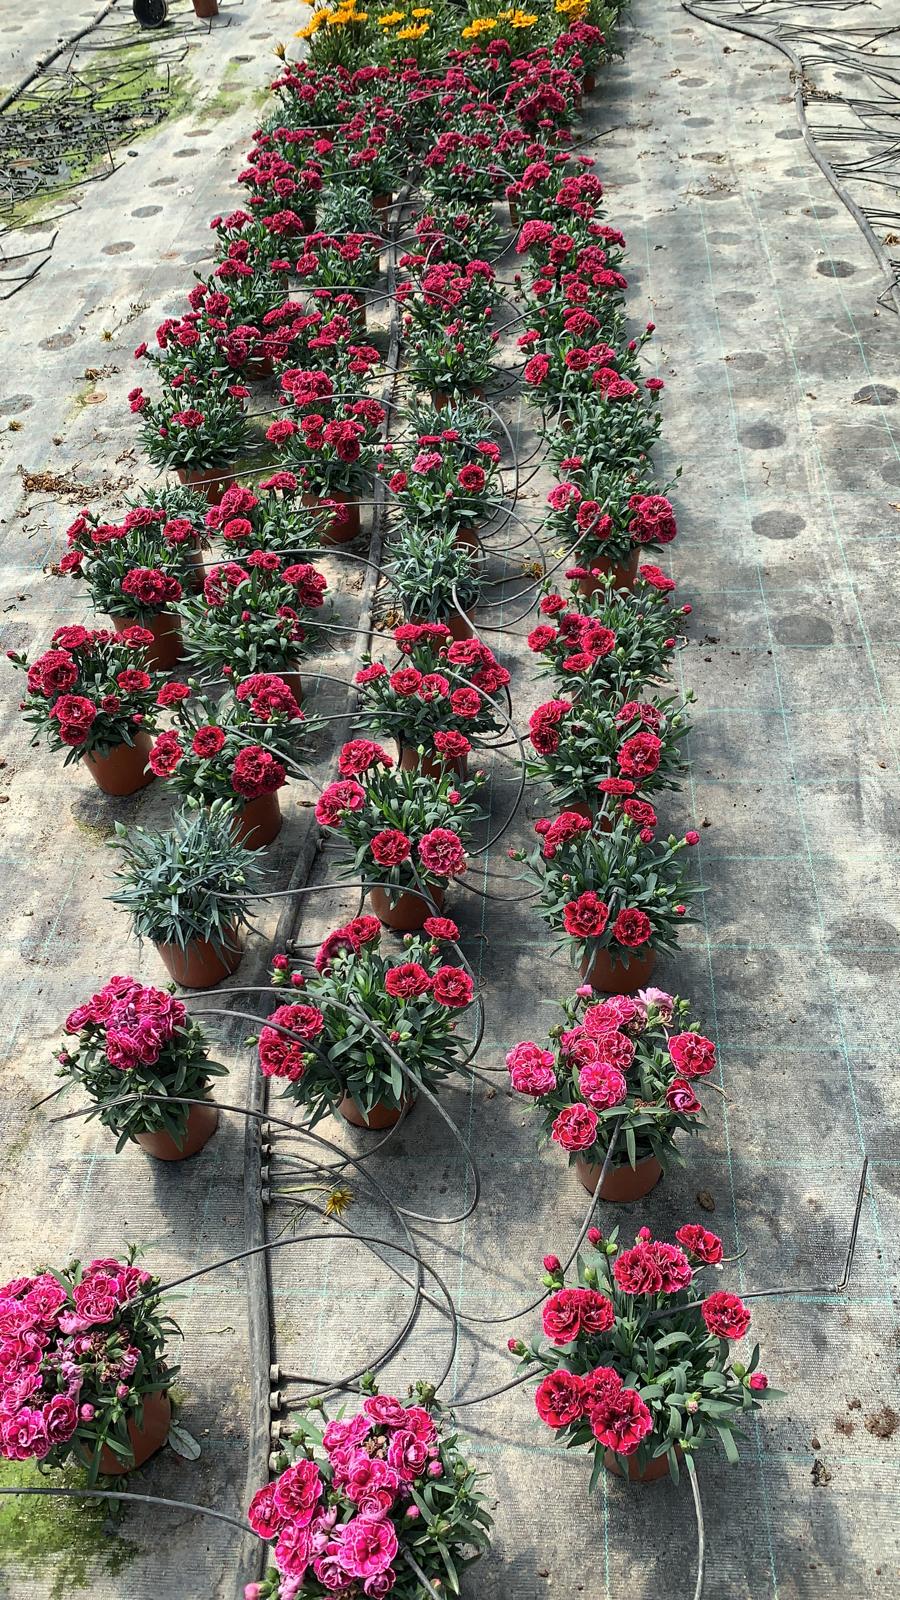 Dianthus / Carnations